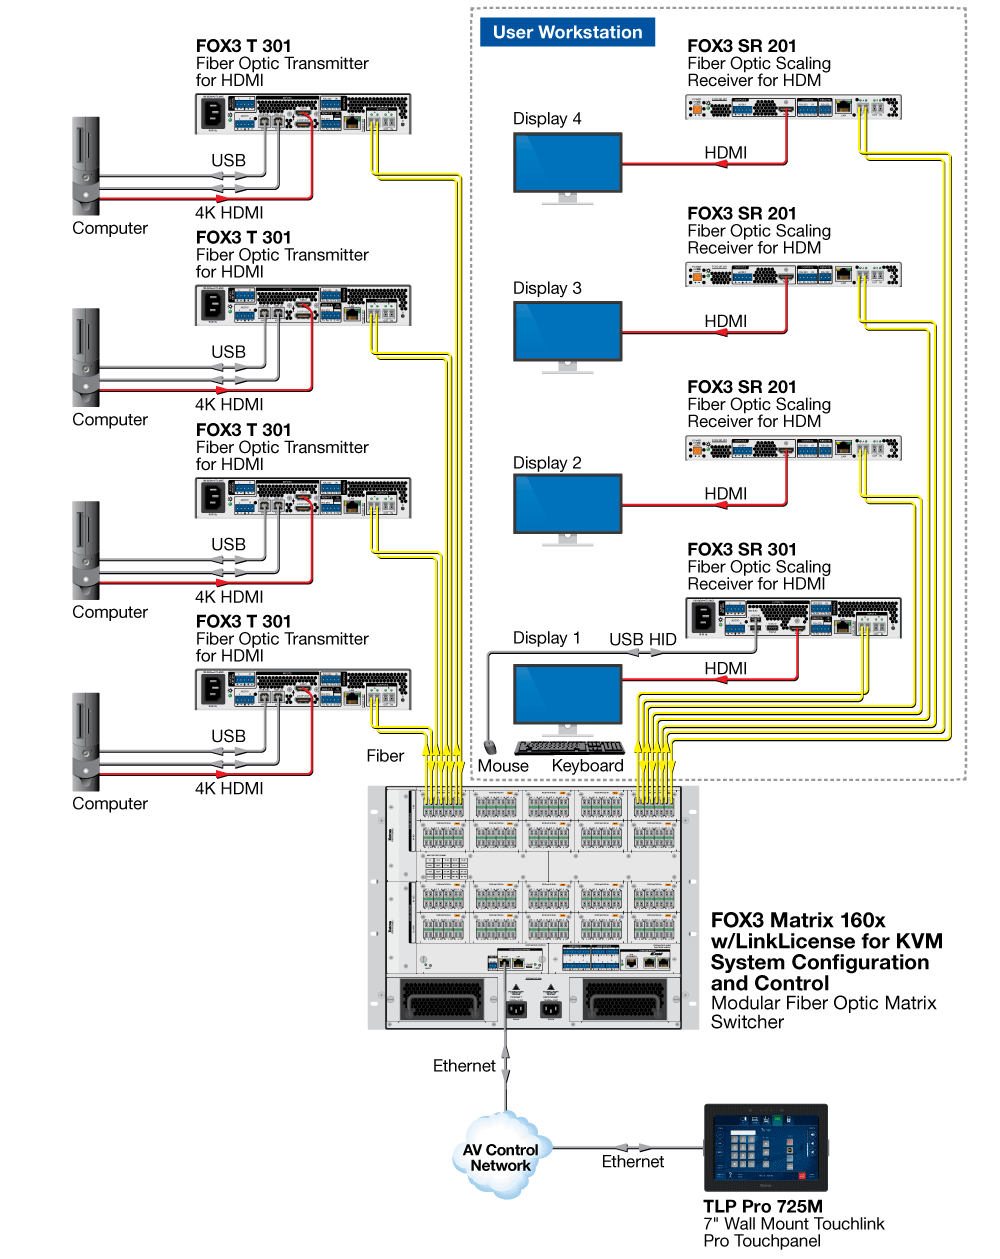 FOX3 Matrix System with KVM LinkLicense Diagram